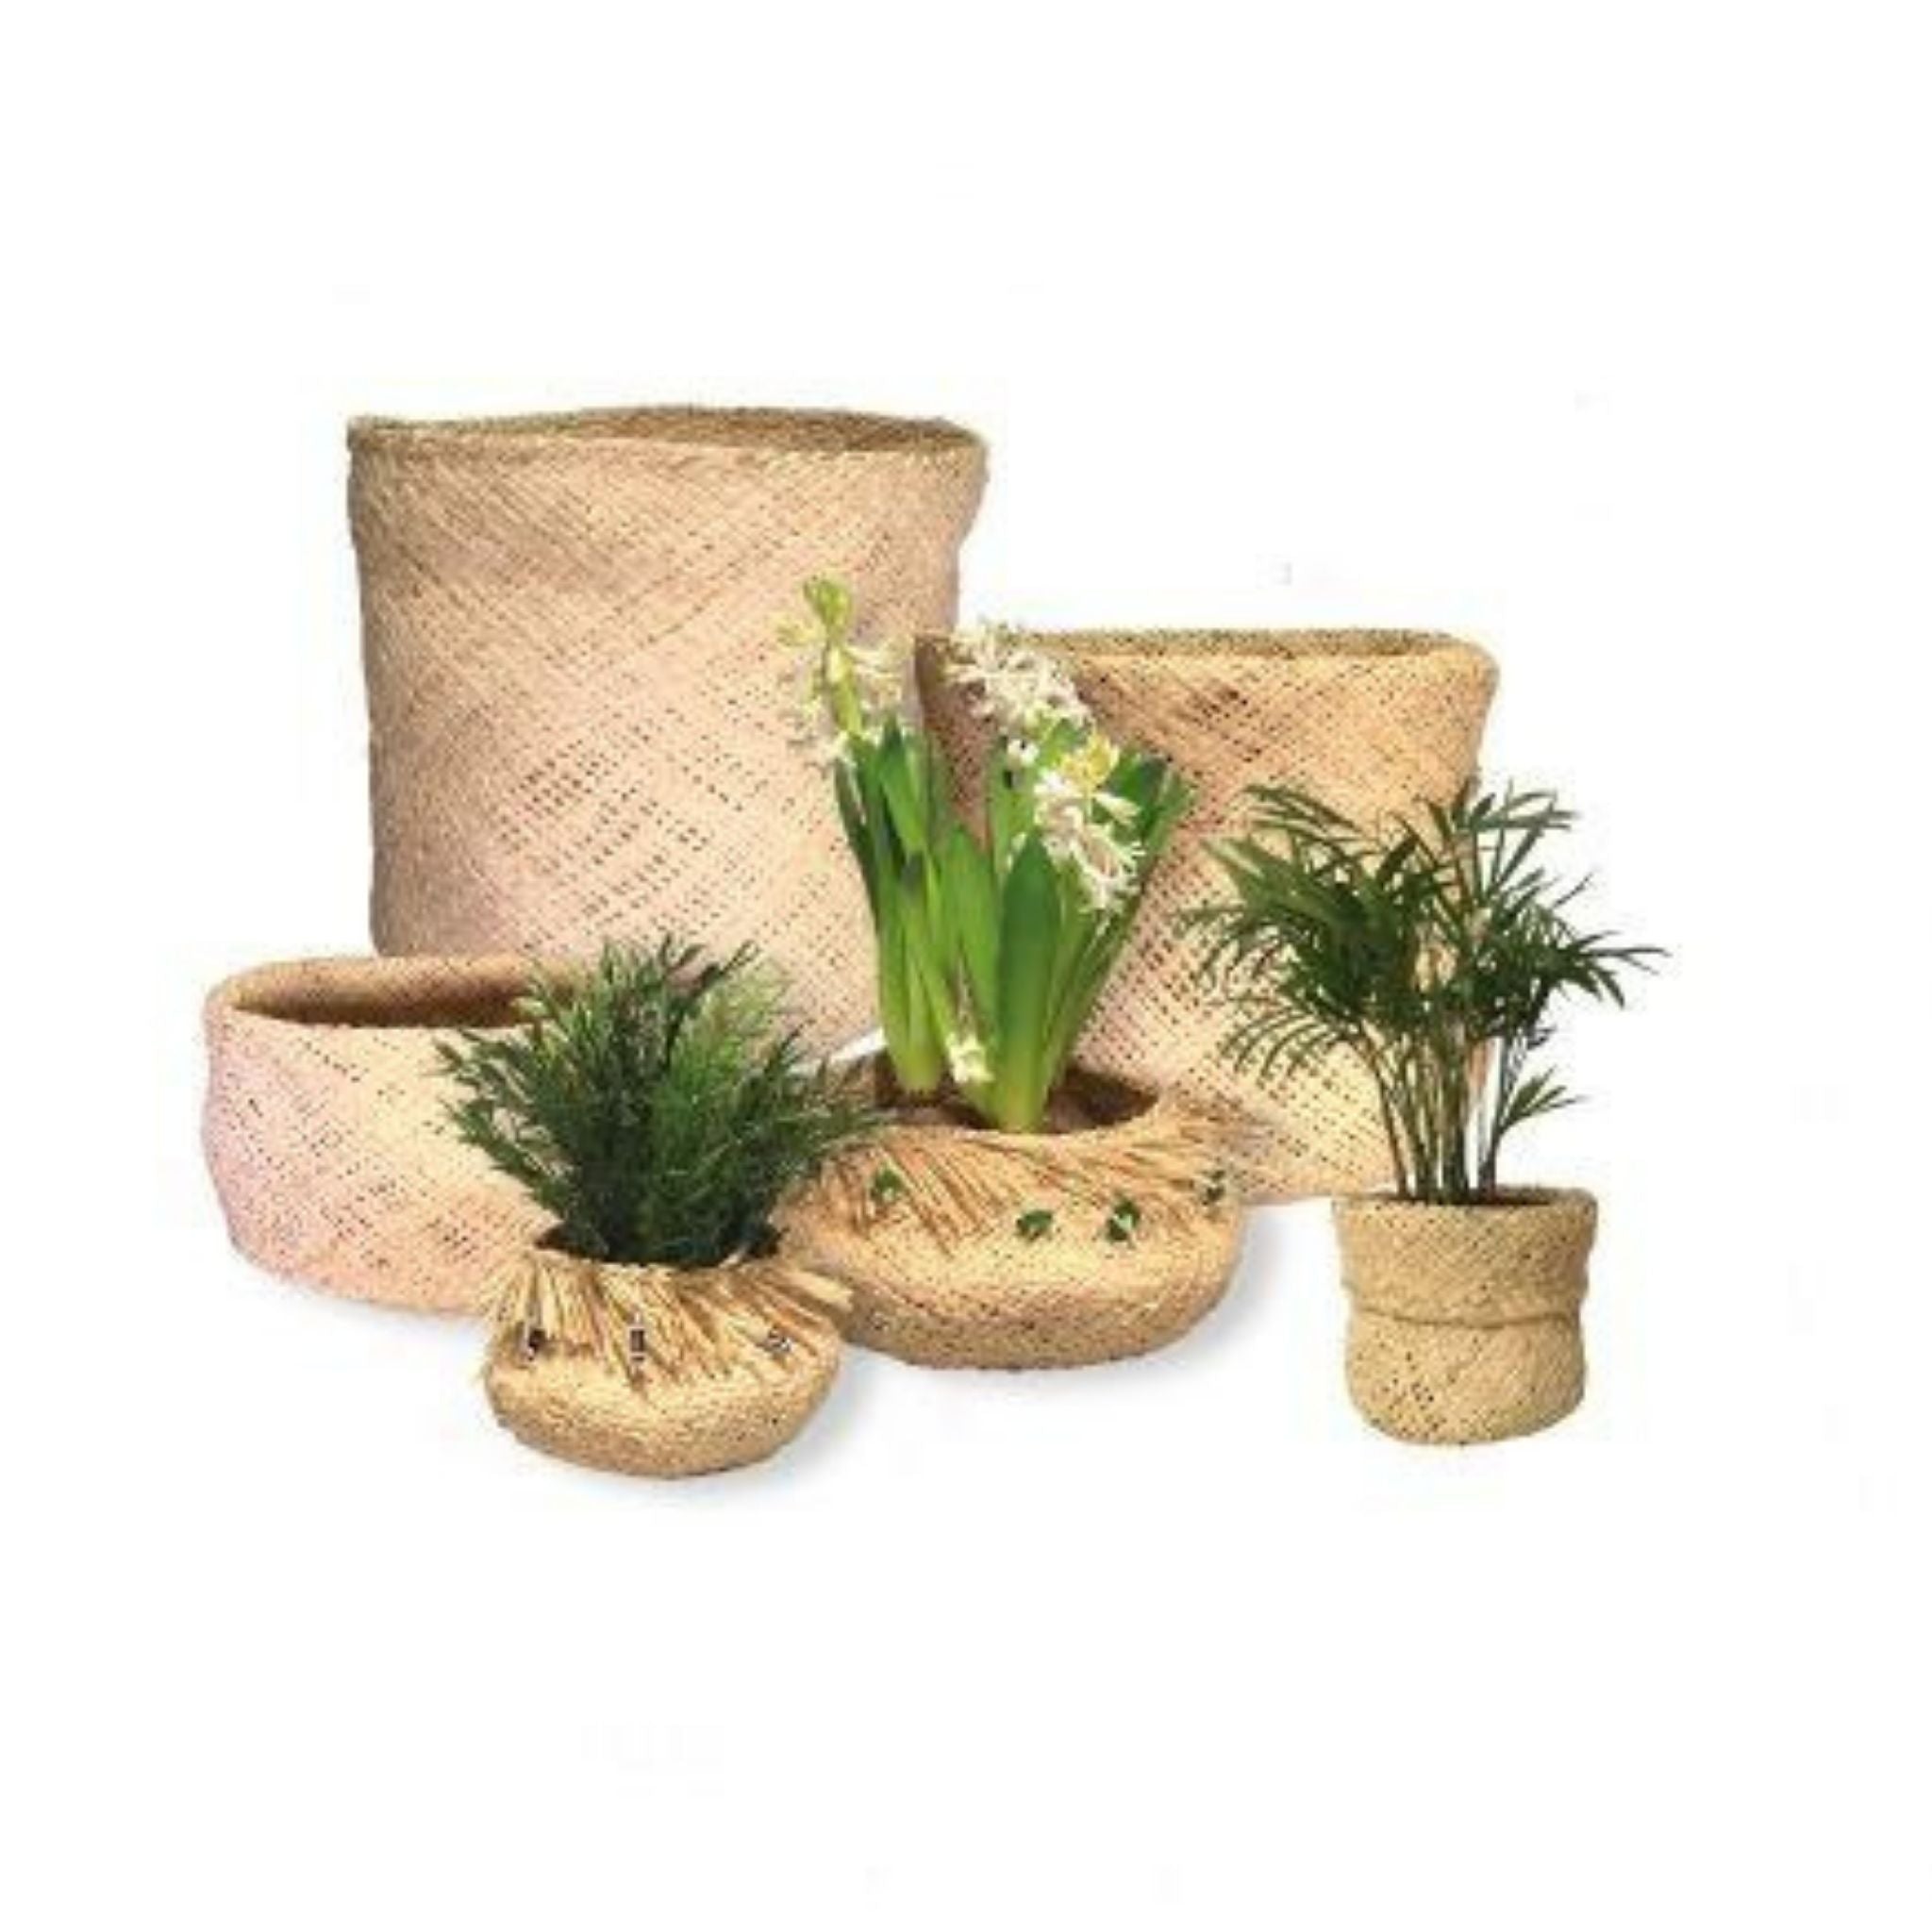 Raffia Set of planters With plants inside 